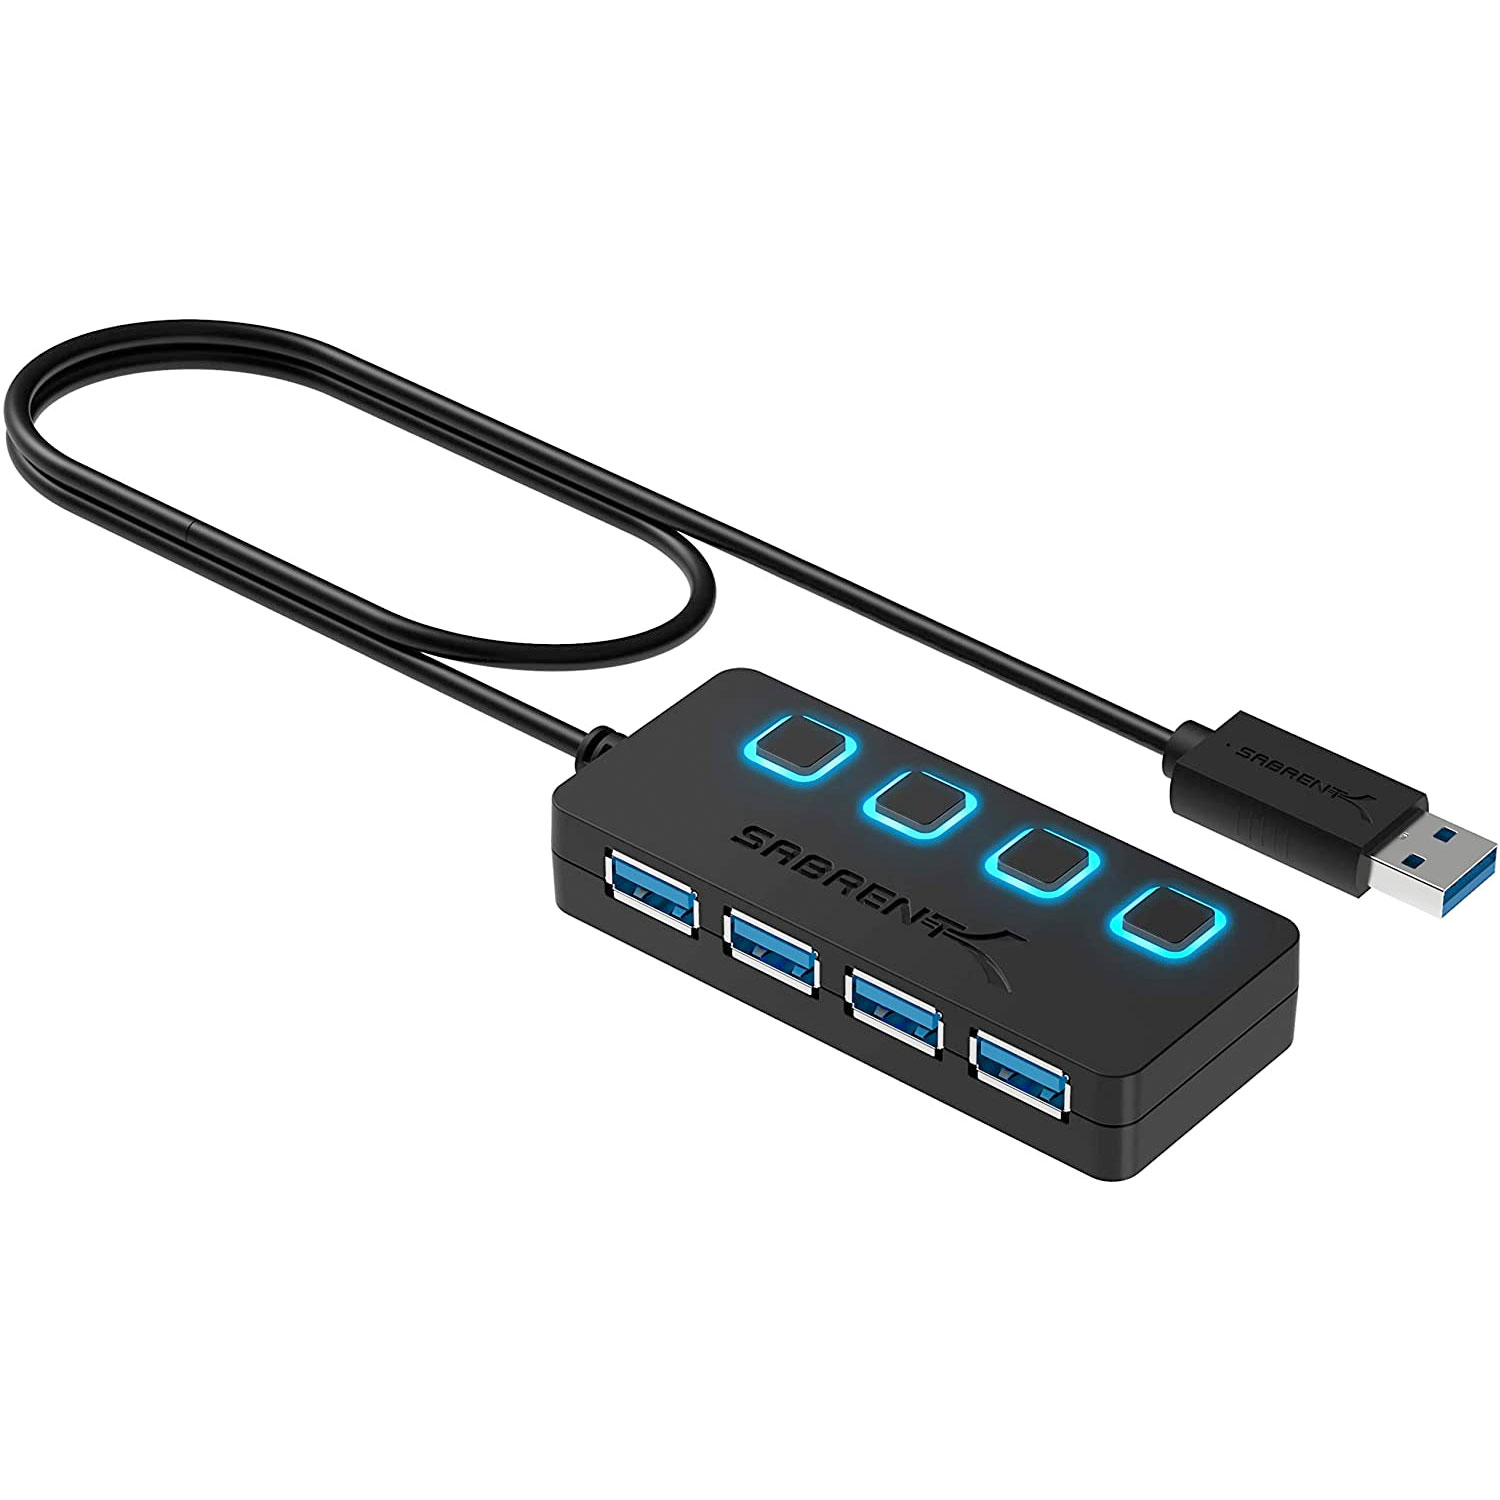 Amazon：Sabrent 4-Port USB 3.0 Hub只卖$6.99